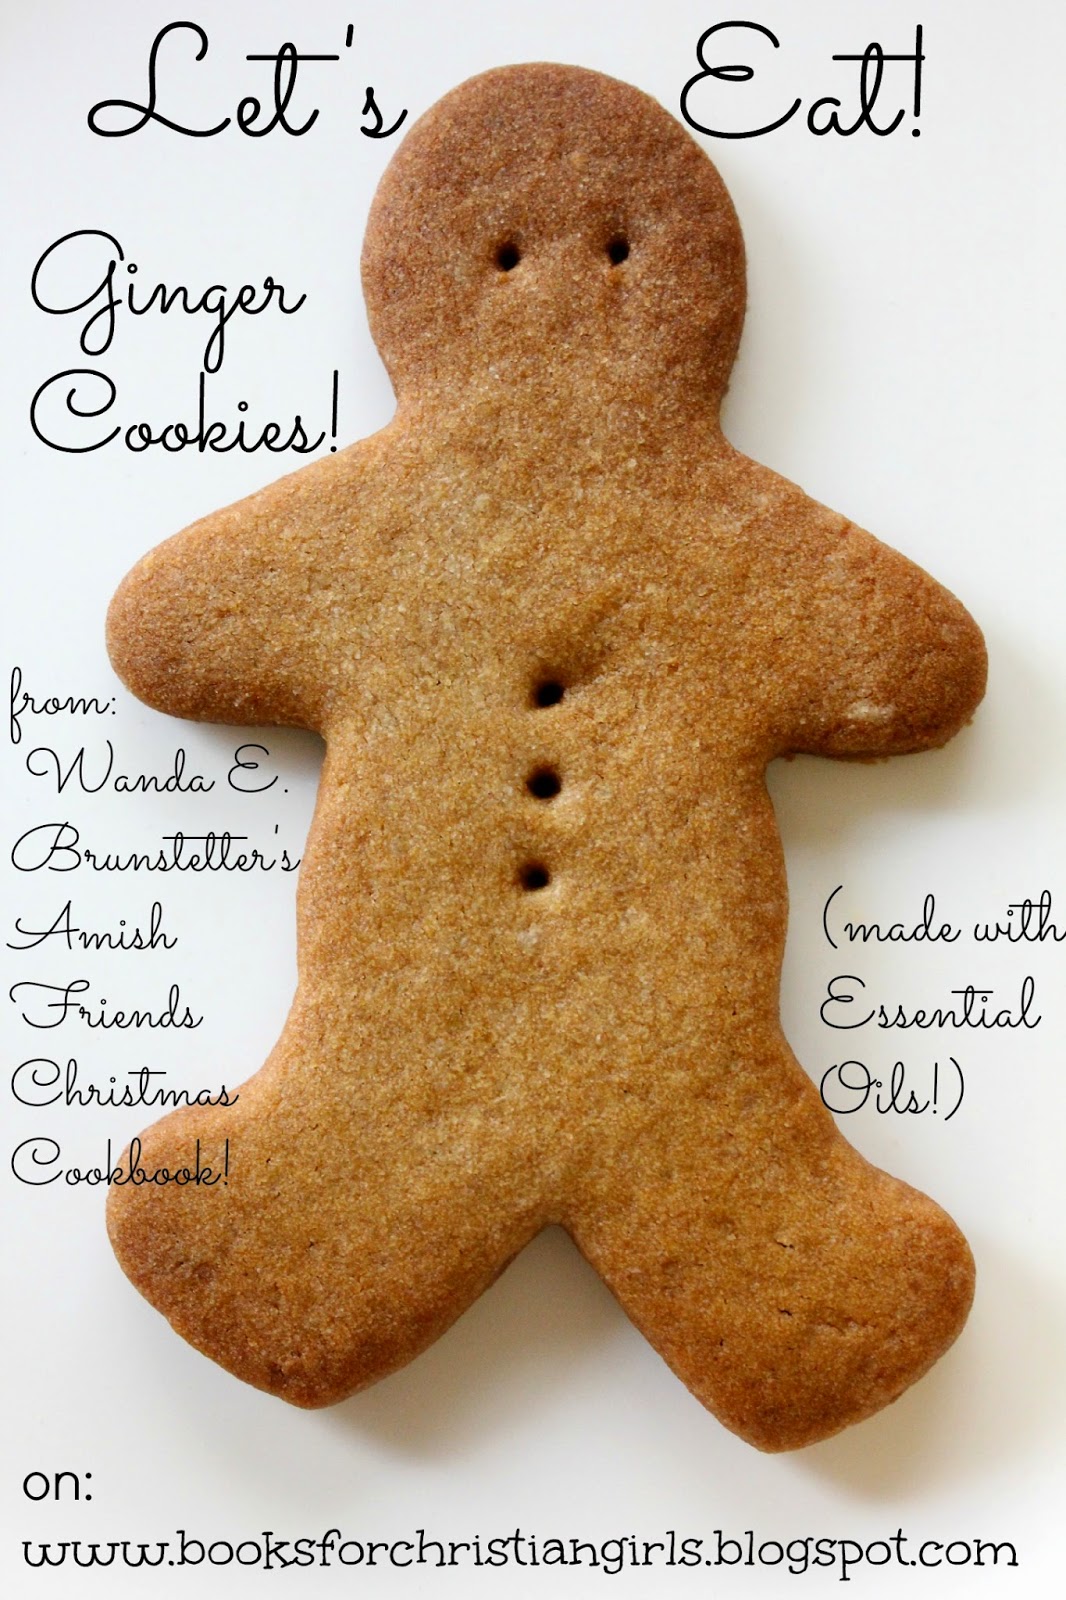 http://booksforchristiangirls.blogspot.com/2014/12/lets-eat-ginger-cookies-from-wanda-e.html